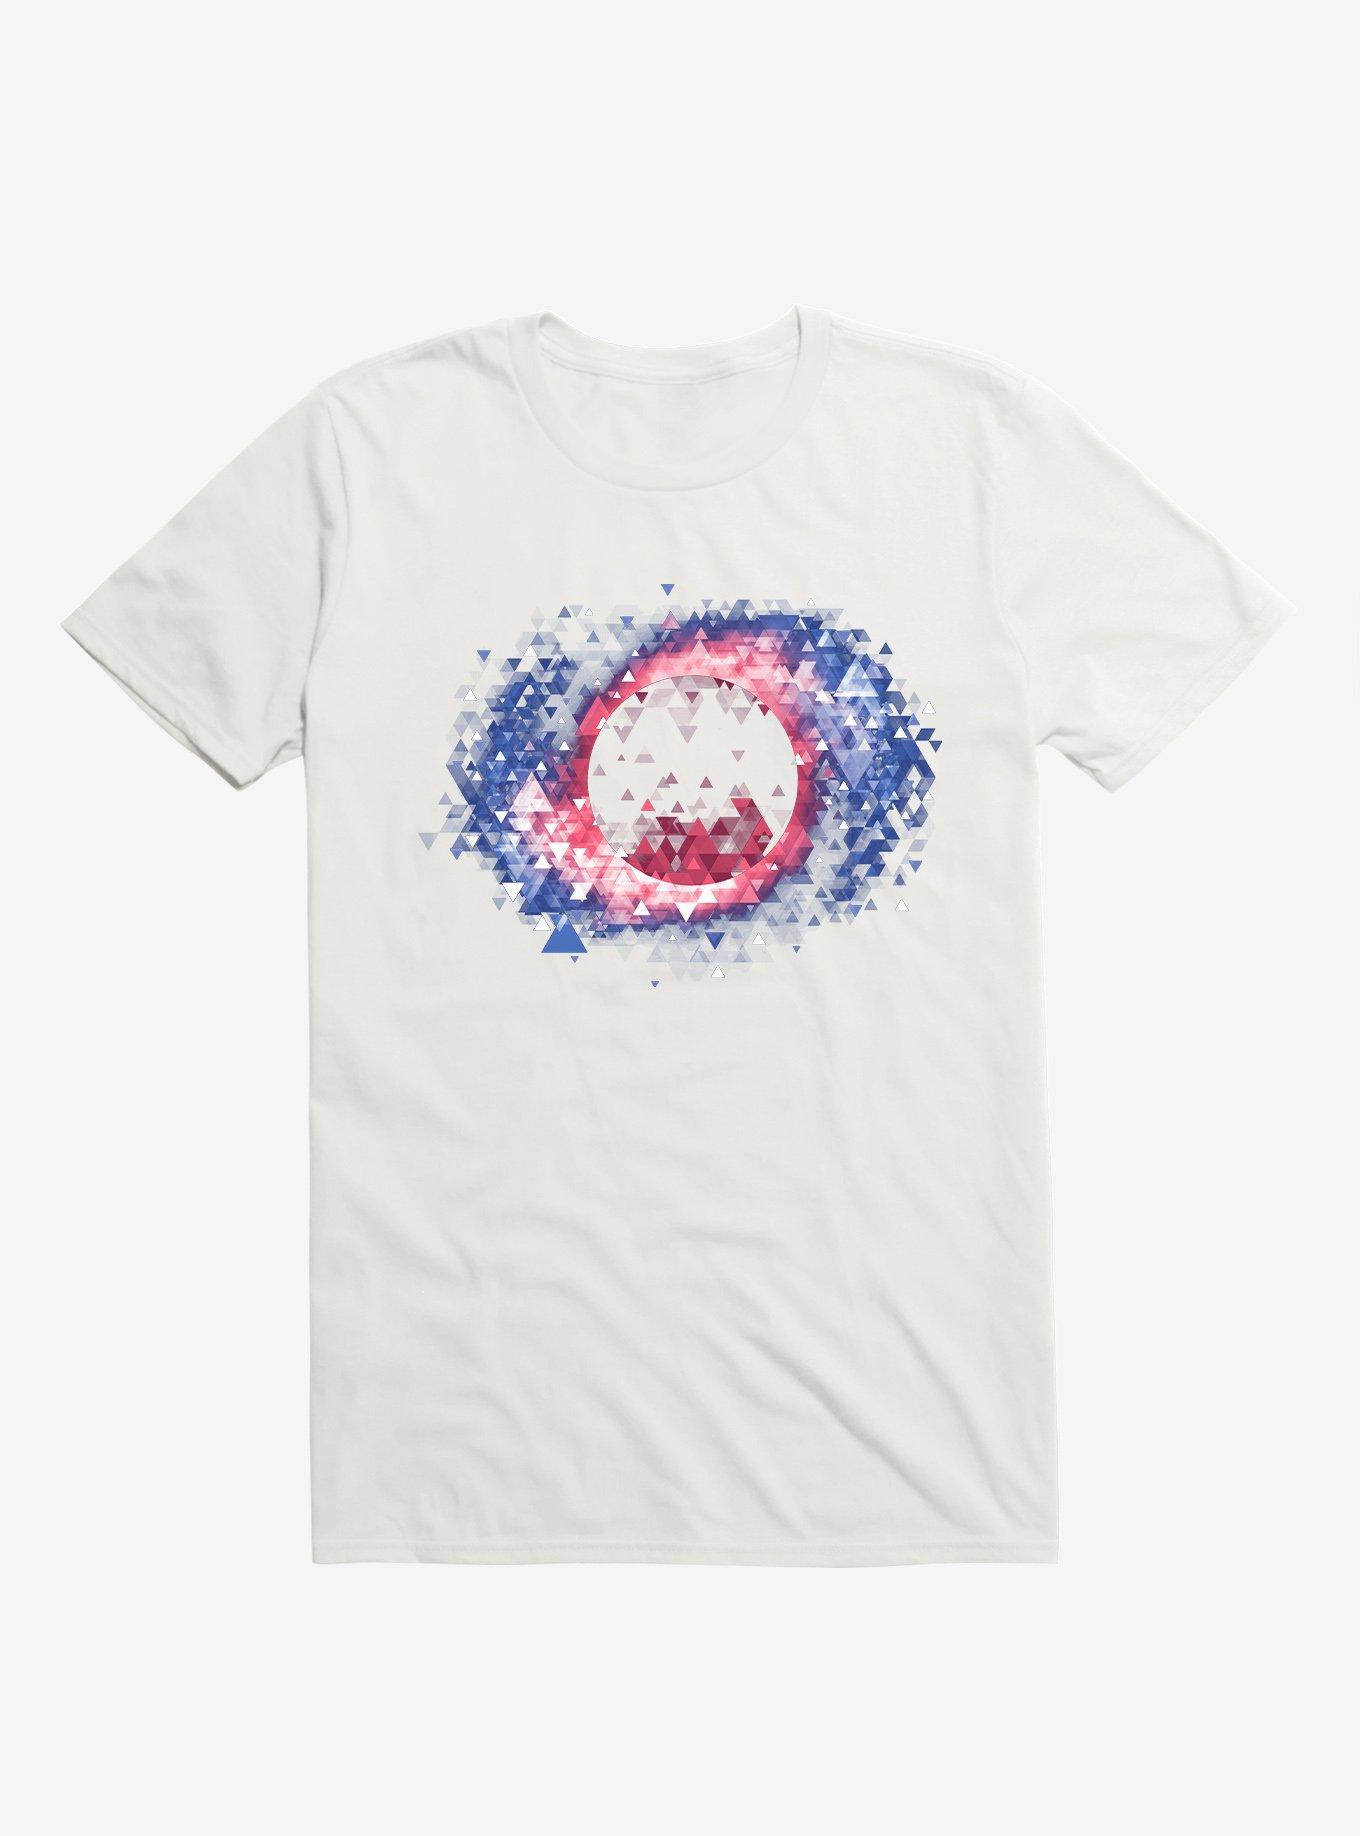 Black Hole Space White T-Shirt